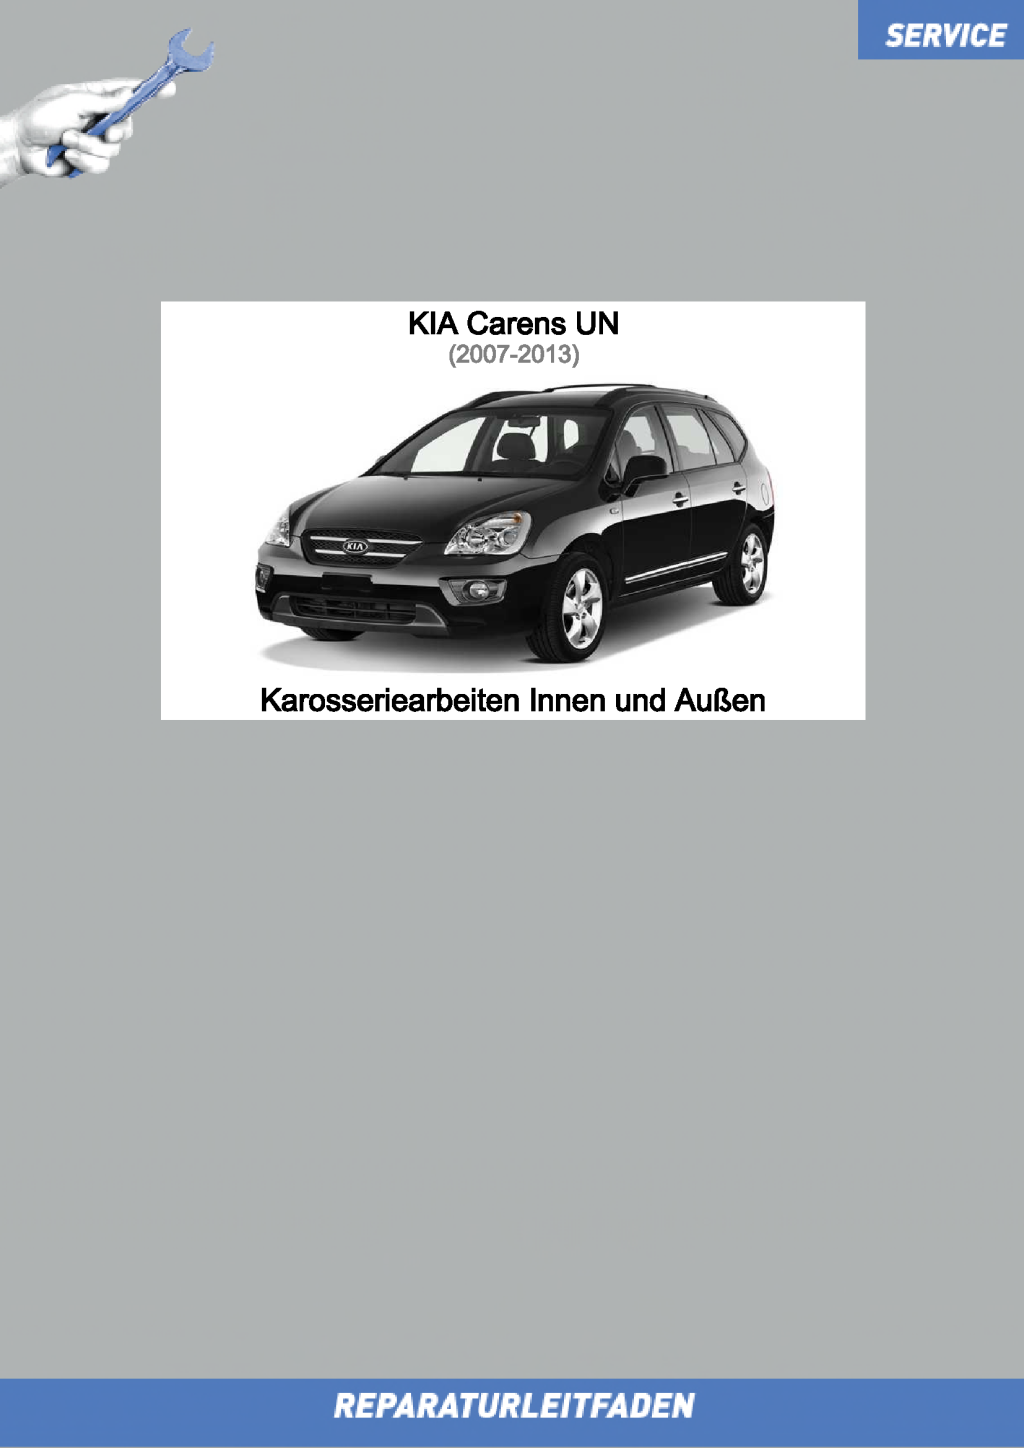 kia carens 2008 owners manual - KIA Carens UN (-) Reparaturleitfaden Karosserie Innen und Außen